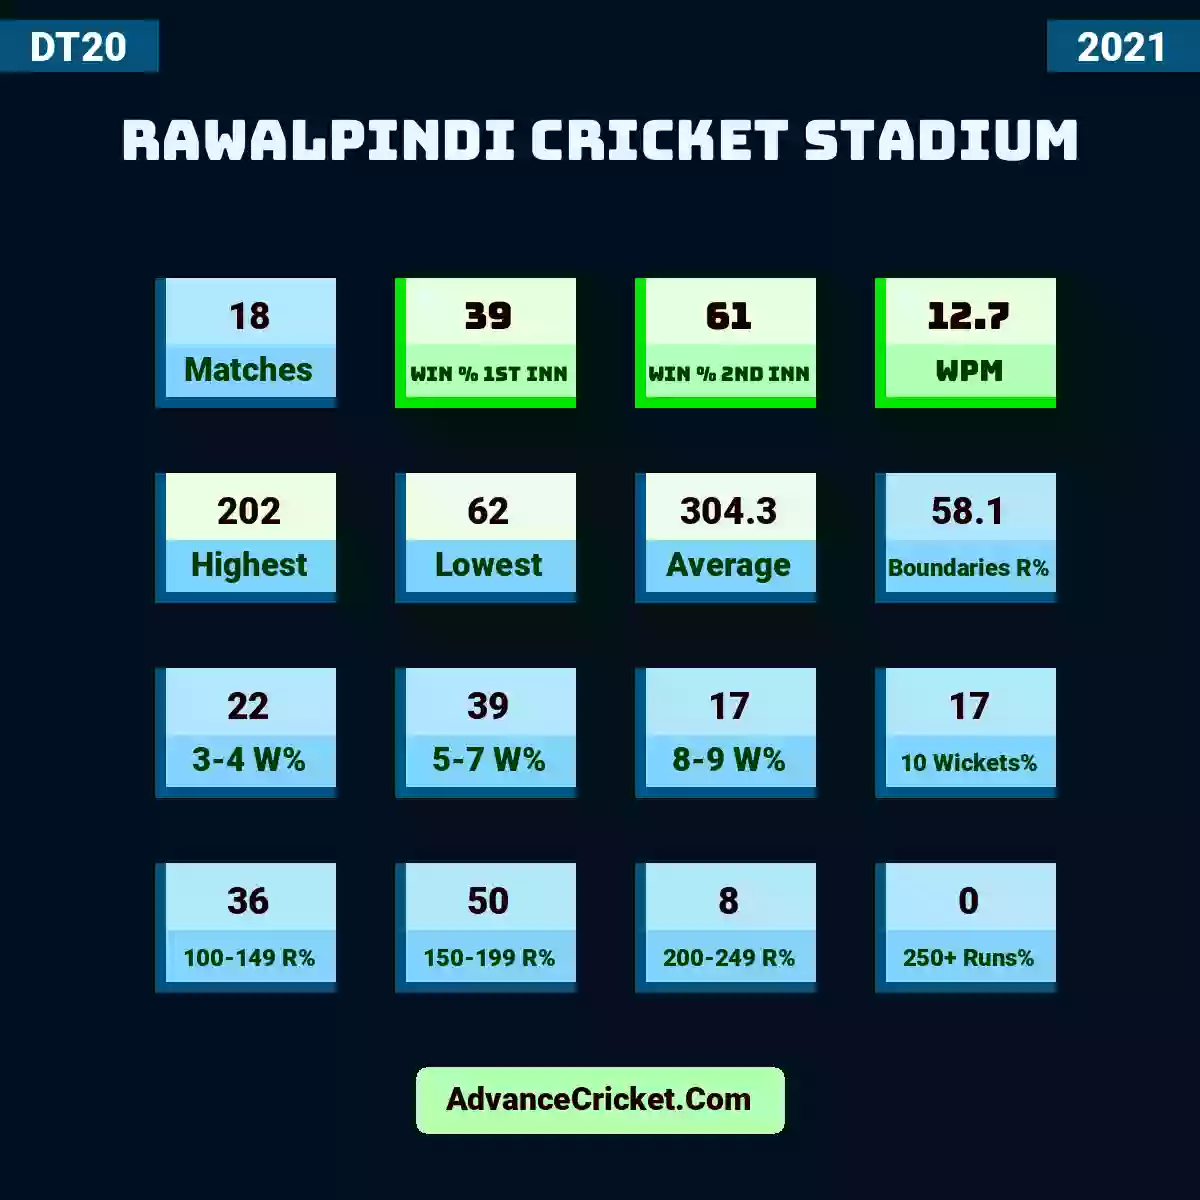 Image showing Rawalpindi Cricket Stadium with Matches: 18, Win % 1st Inn: 39, Win % 2nd Inn: 61, WPM: 12.7, Highest: 202, Lowest: 62, Average: 304.3, Boundaries R%: 58.1, 3-4 W%: 22, 5-7 W%: 39, 8-9 W%: 17, 10 Wickets%: 17, 100-149 R%: 36, 150-199 R%: 50, 200-249 R%: 8, 250+ Runs%: 0.